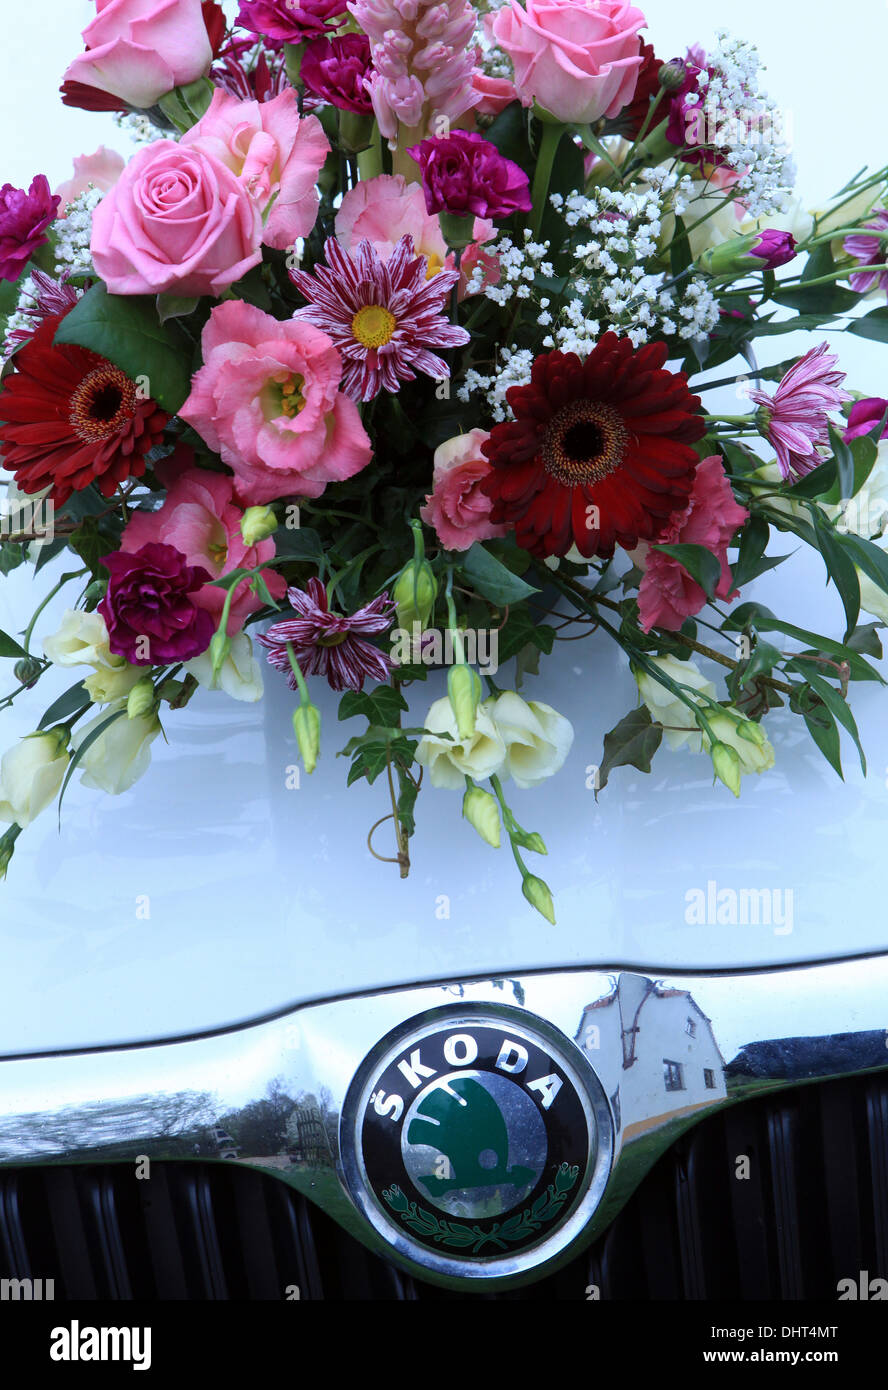 https://c8.alamy.com/comp/DHT4MT/wedding-bouquet-on-the-car-hood-DHT4MT.jpg